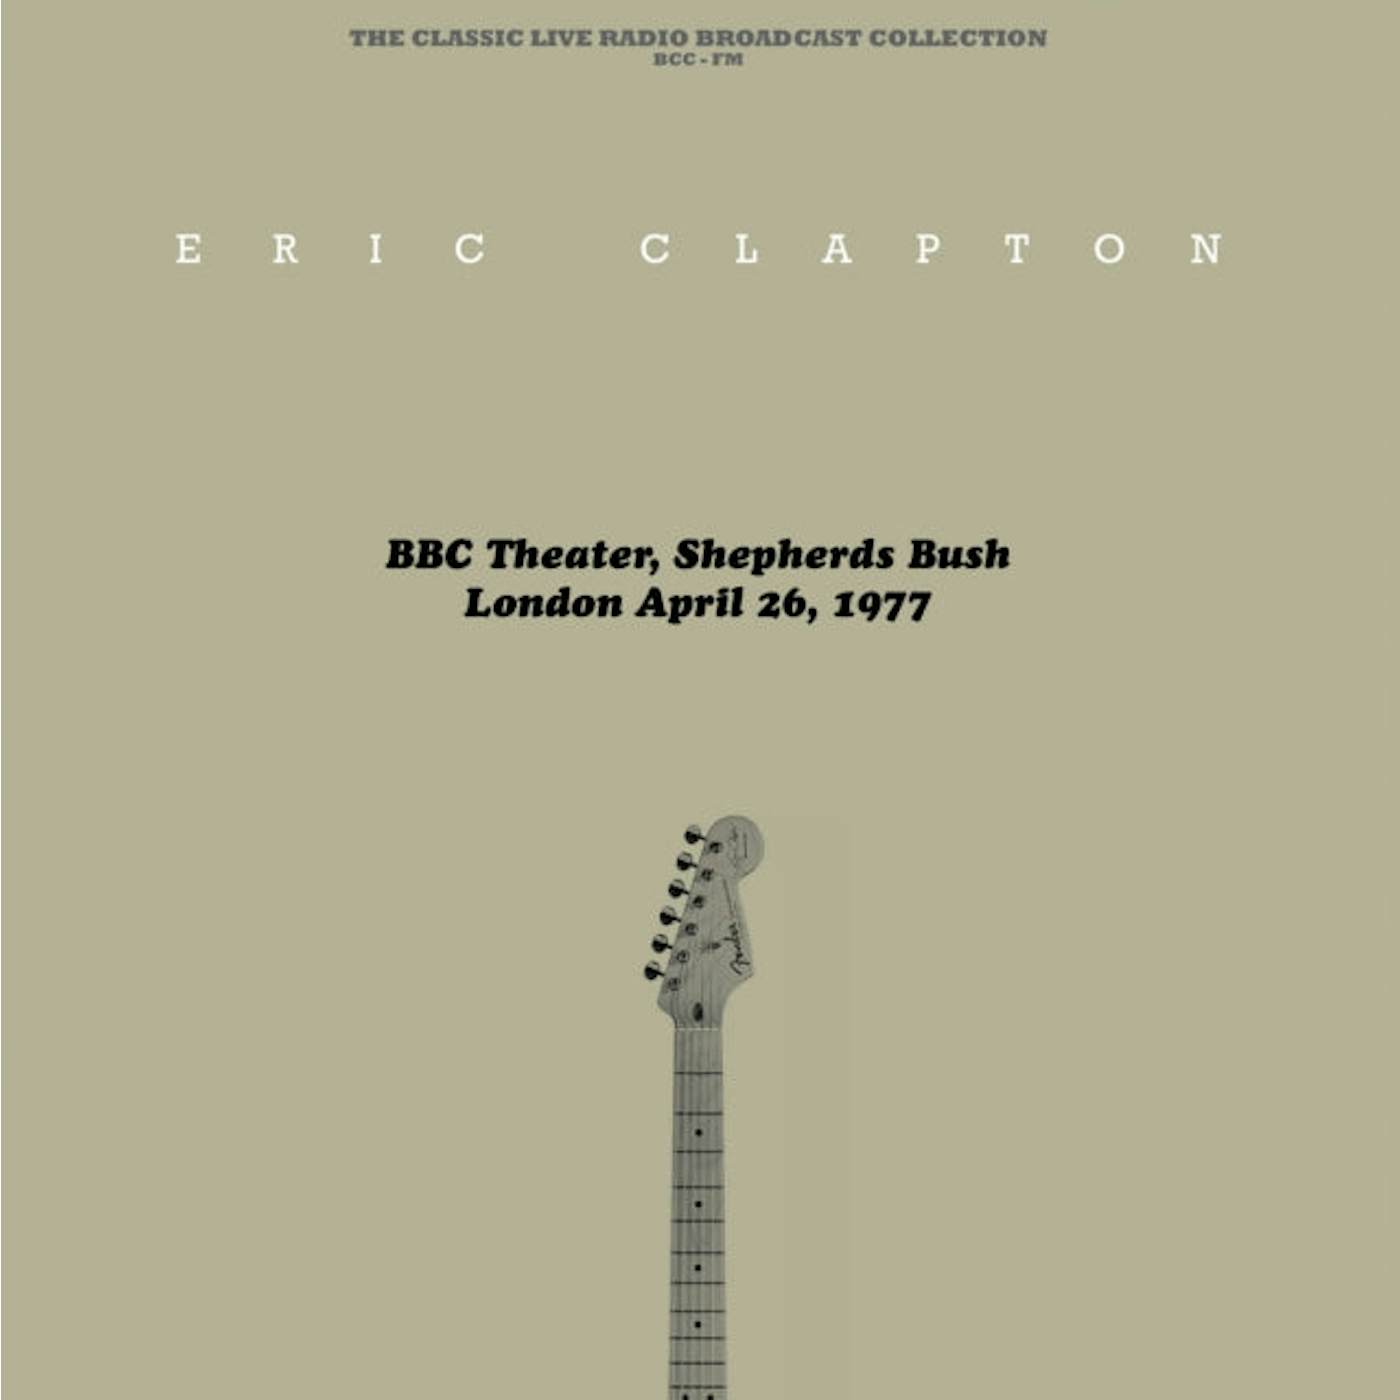 Eric Clapton Slowhand at 70 Live At The Royal Albert Hall Blu-Ray